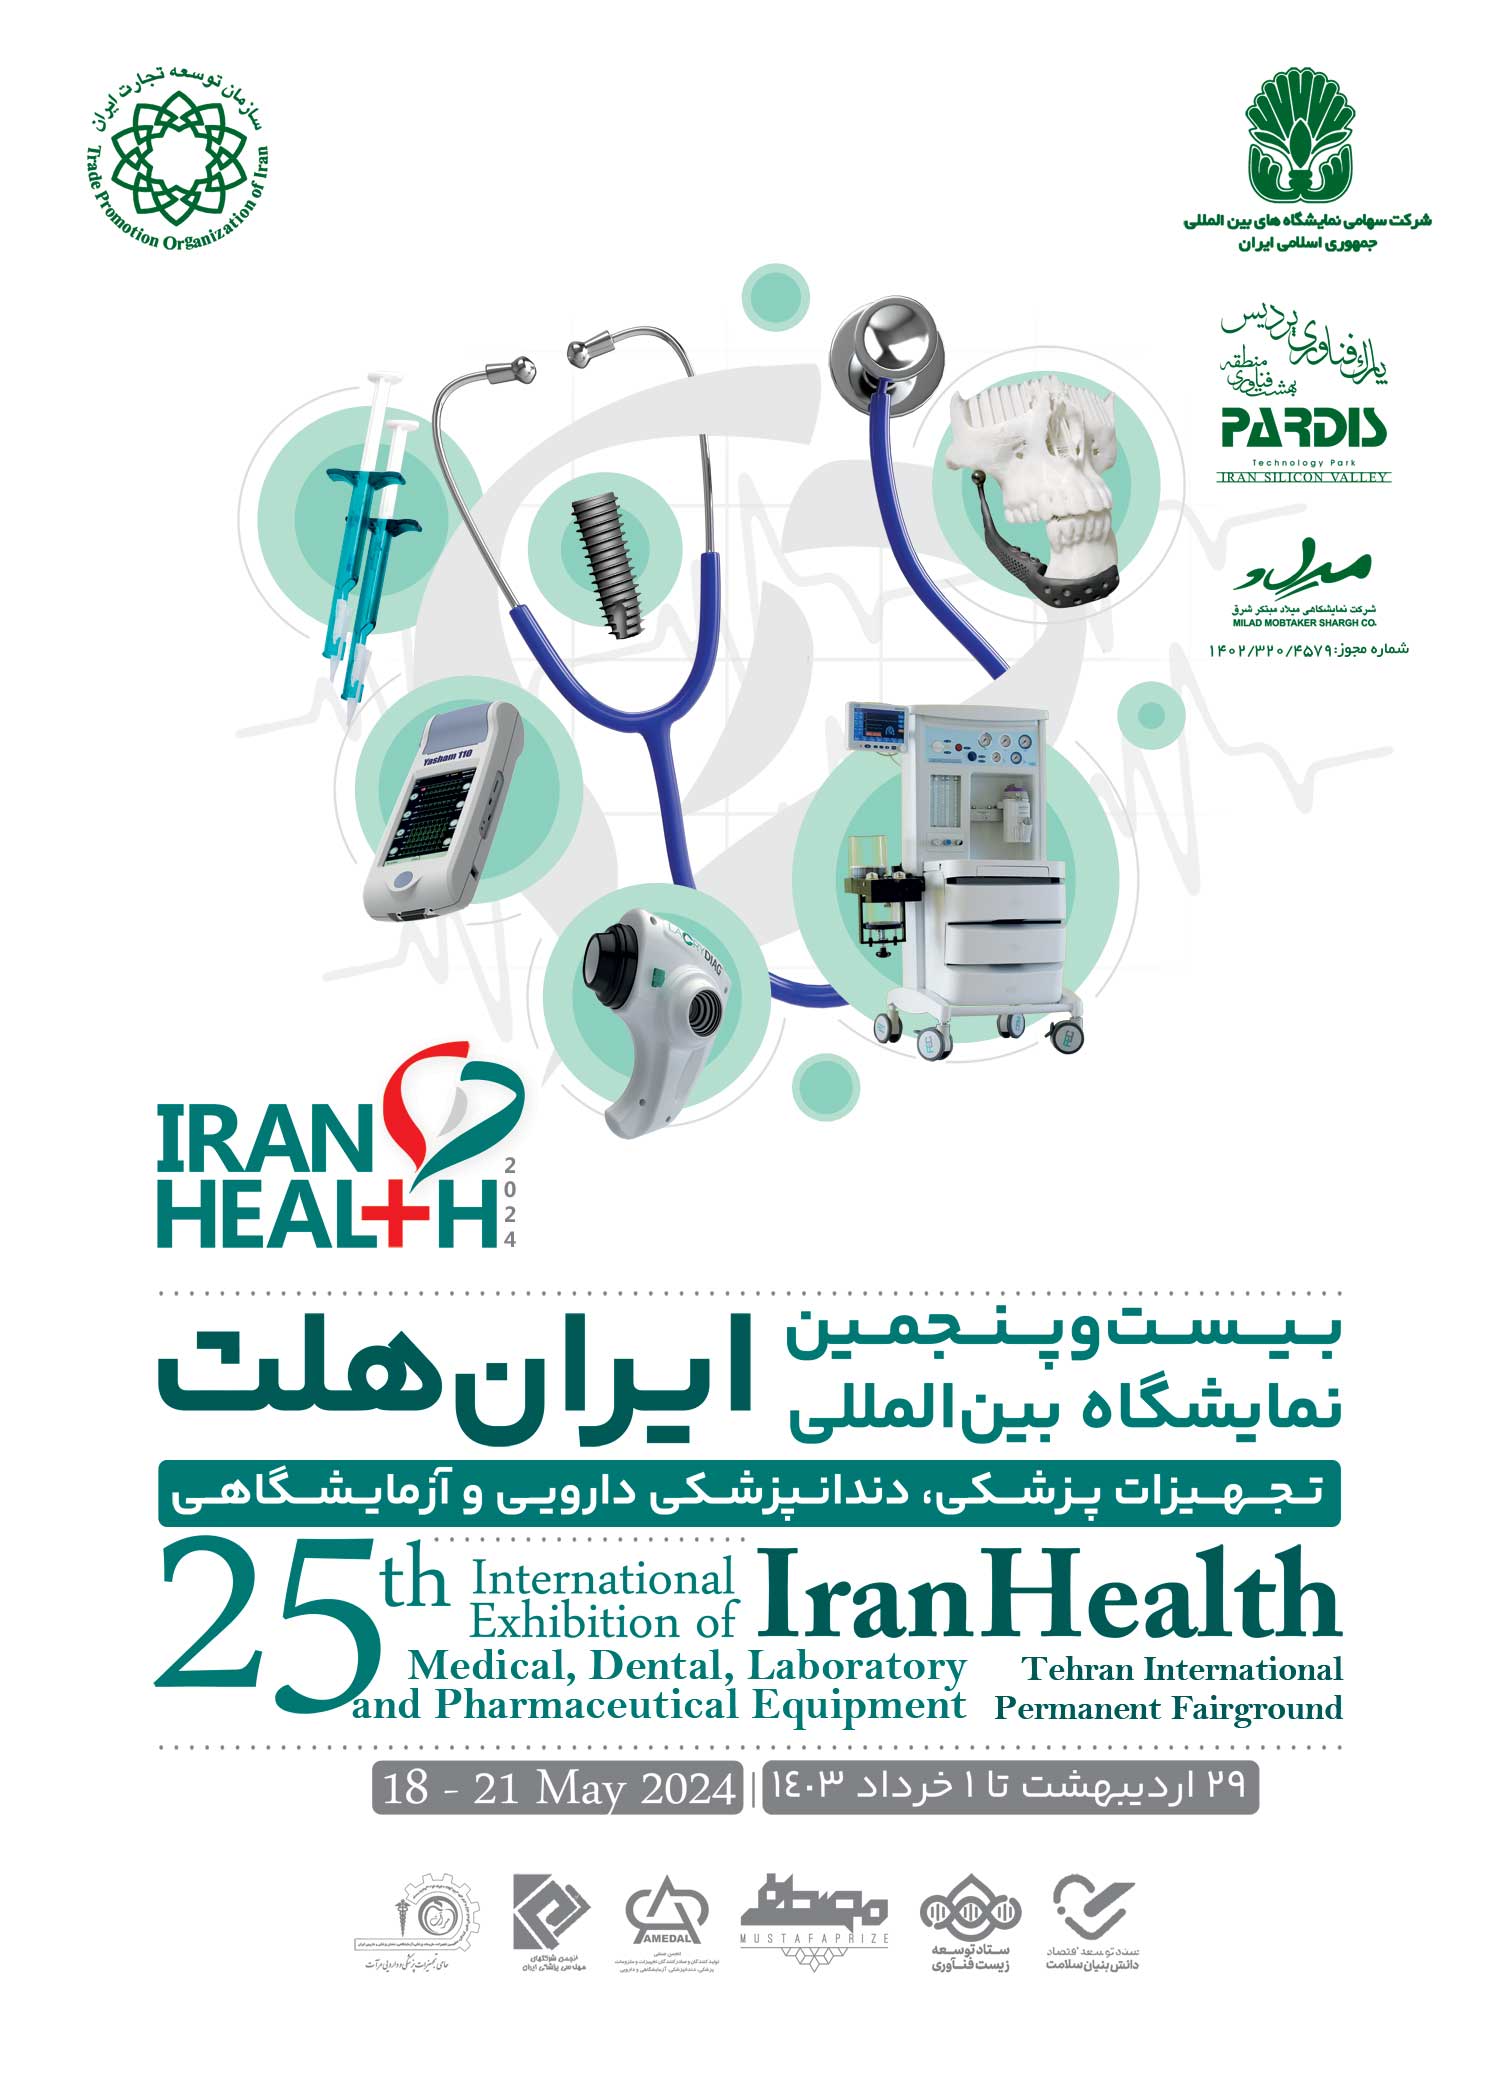 poster1403 iranhealth - The 25th International Health Exhibition 2024 in Iran/Tehran